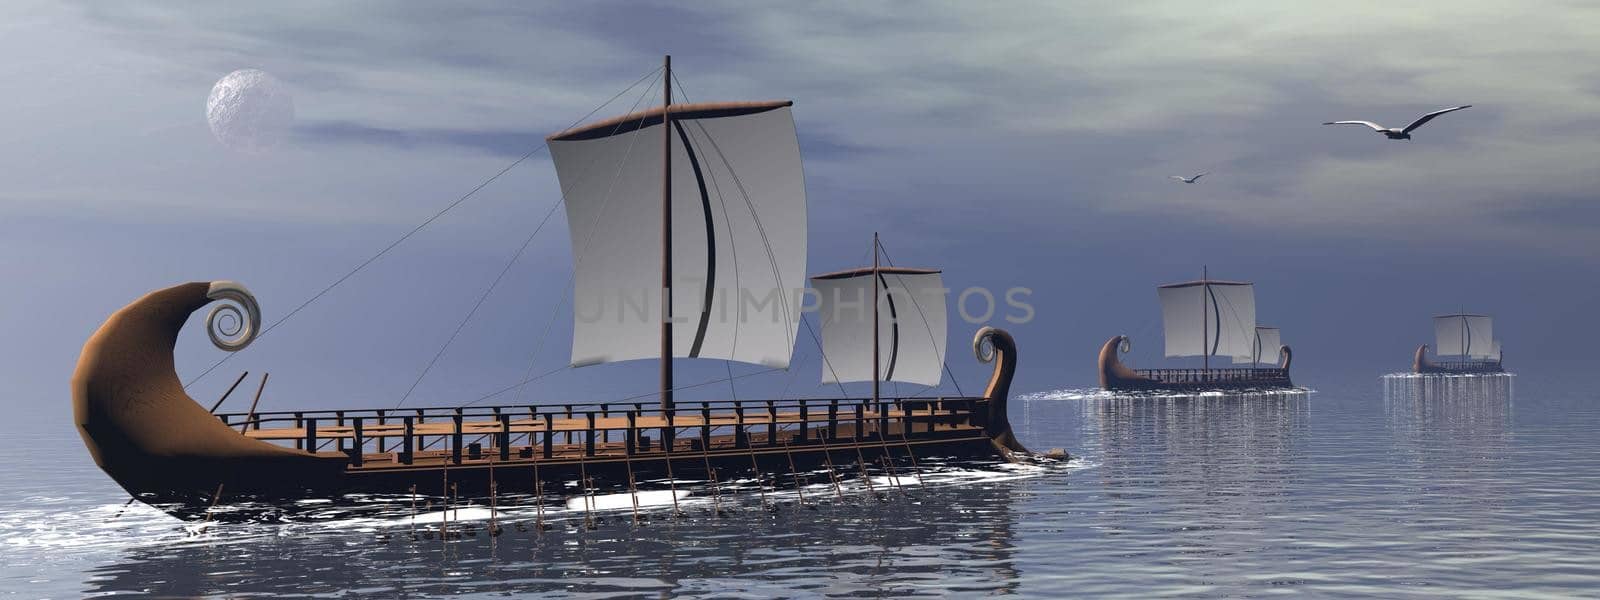 Greek trireme boats - 3D render by Elenaphotos21